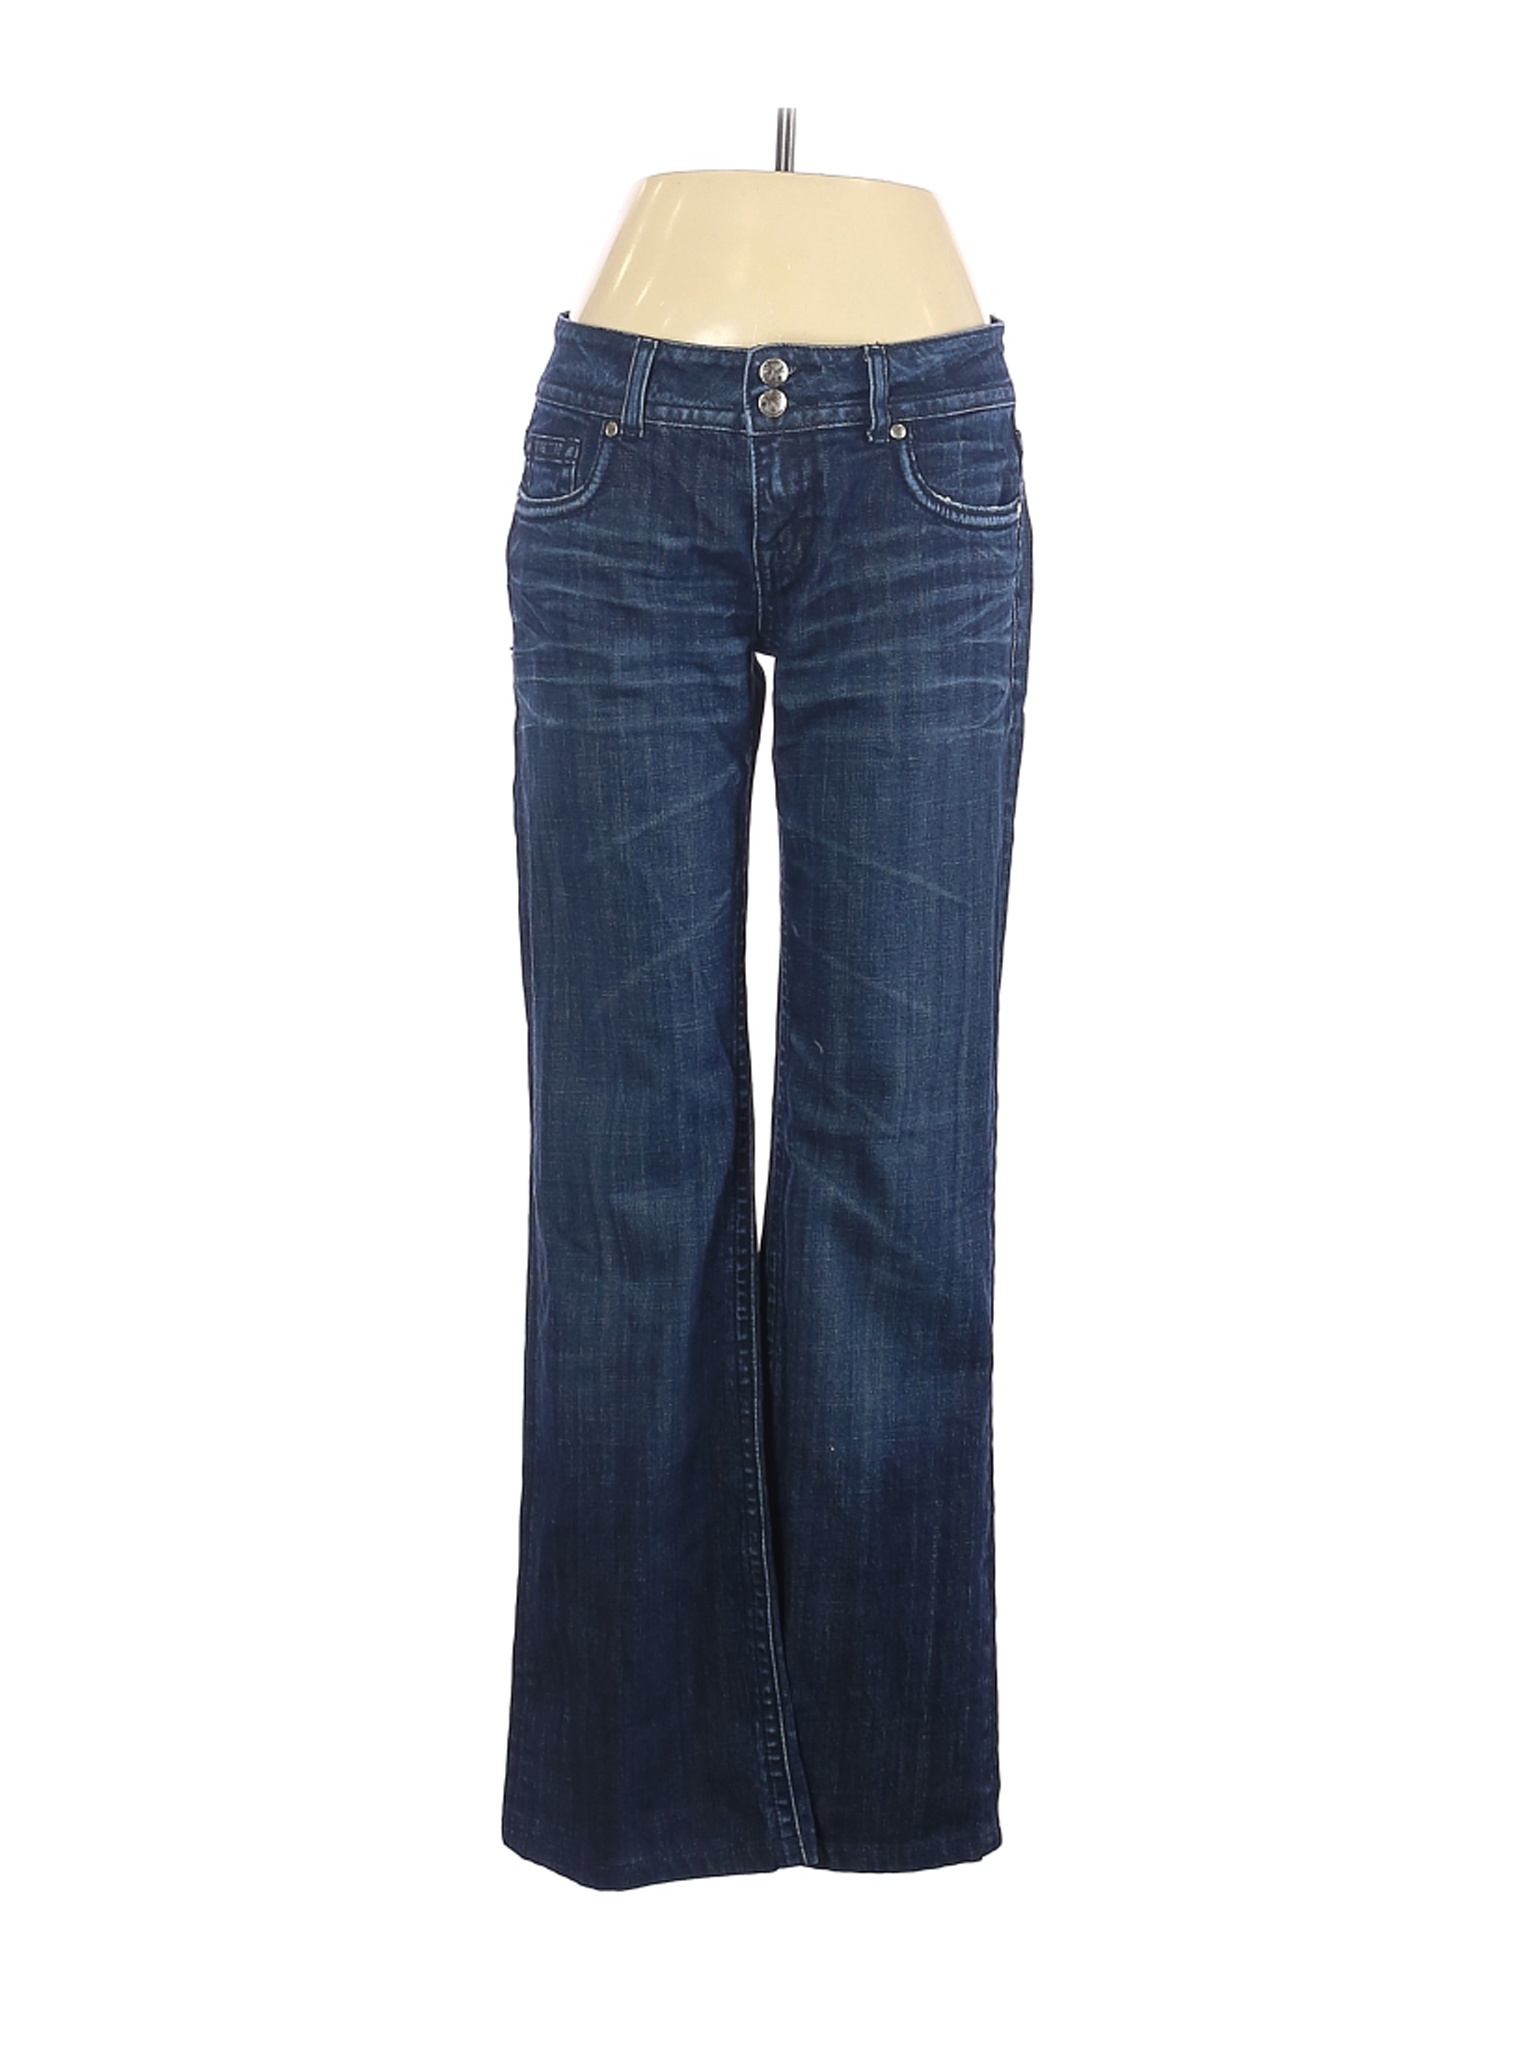 Vigoss Studio Women Blue Jeans 5 | eBay